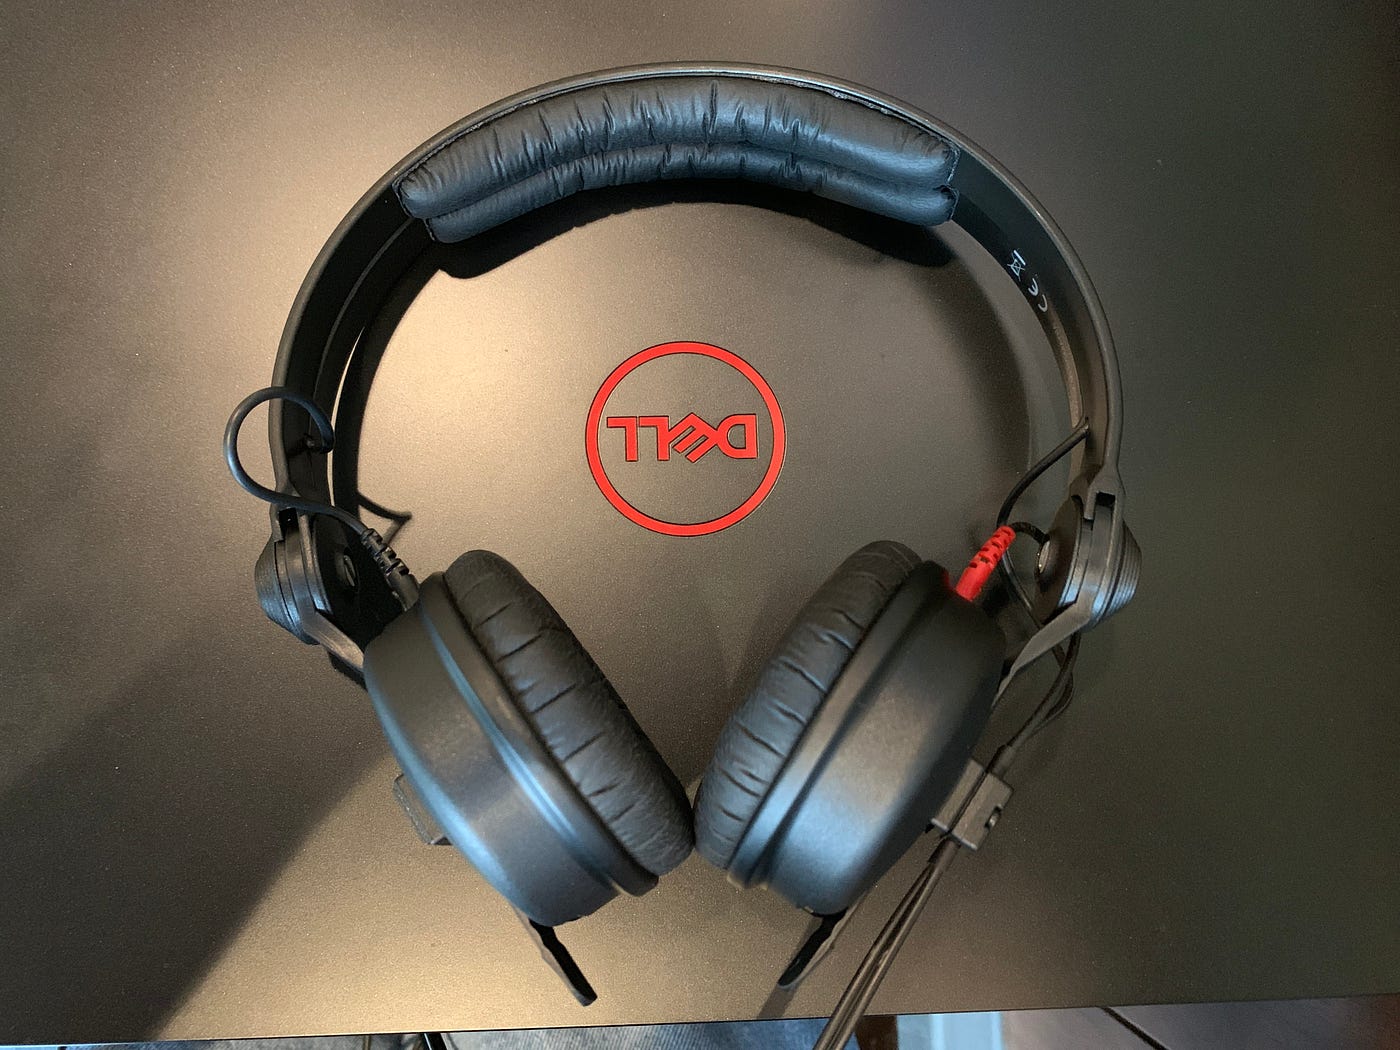 Sennheiser HD25 Headphone Review: A True Workhorse | by Alex Rowe | Medium